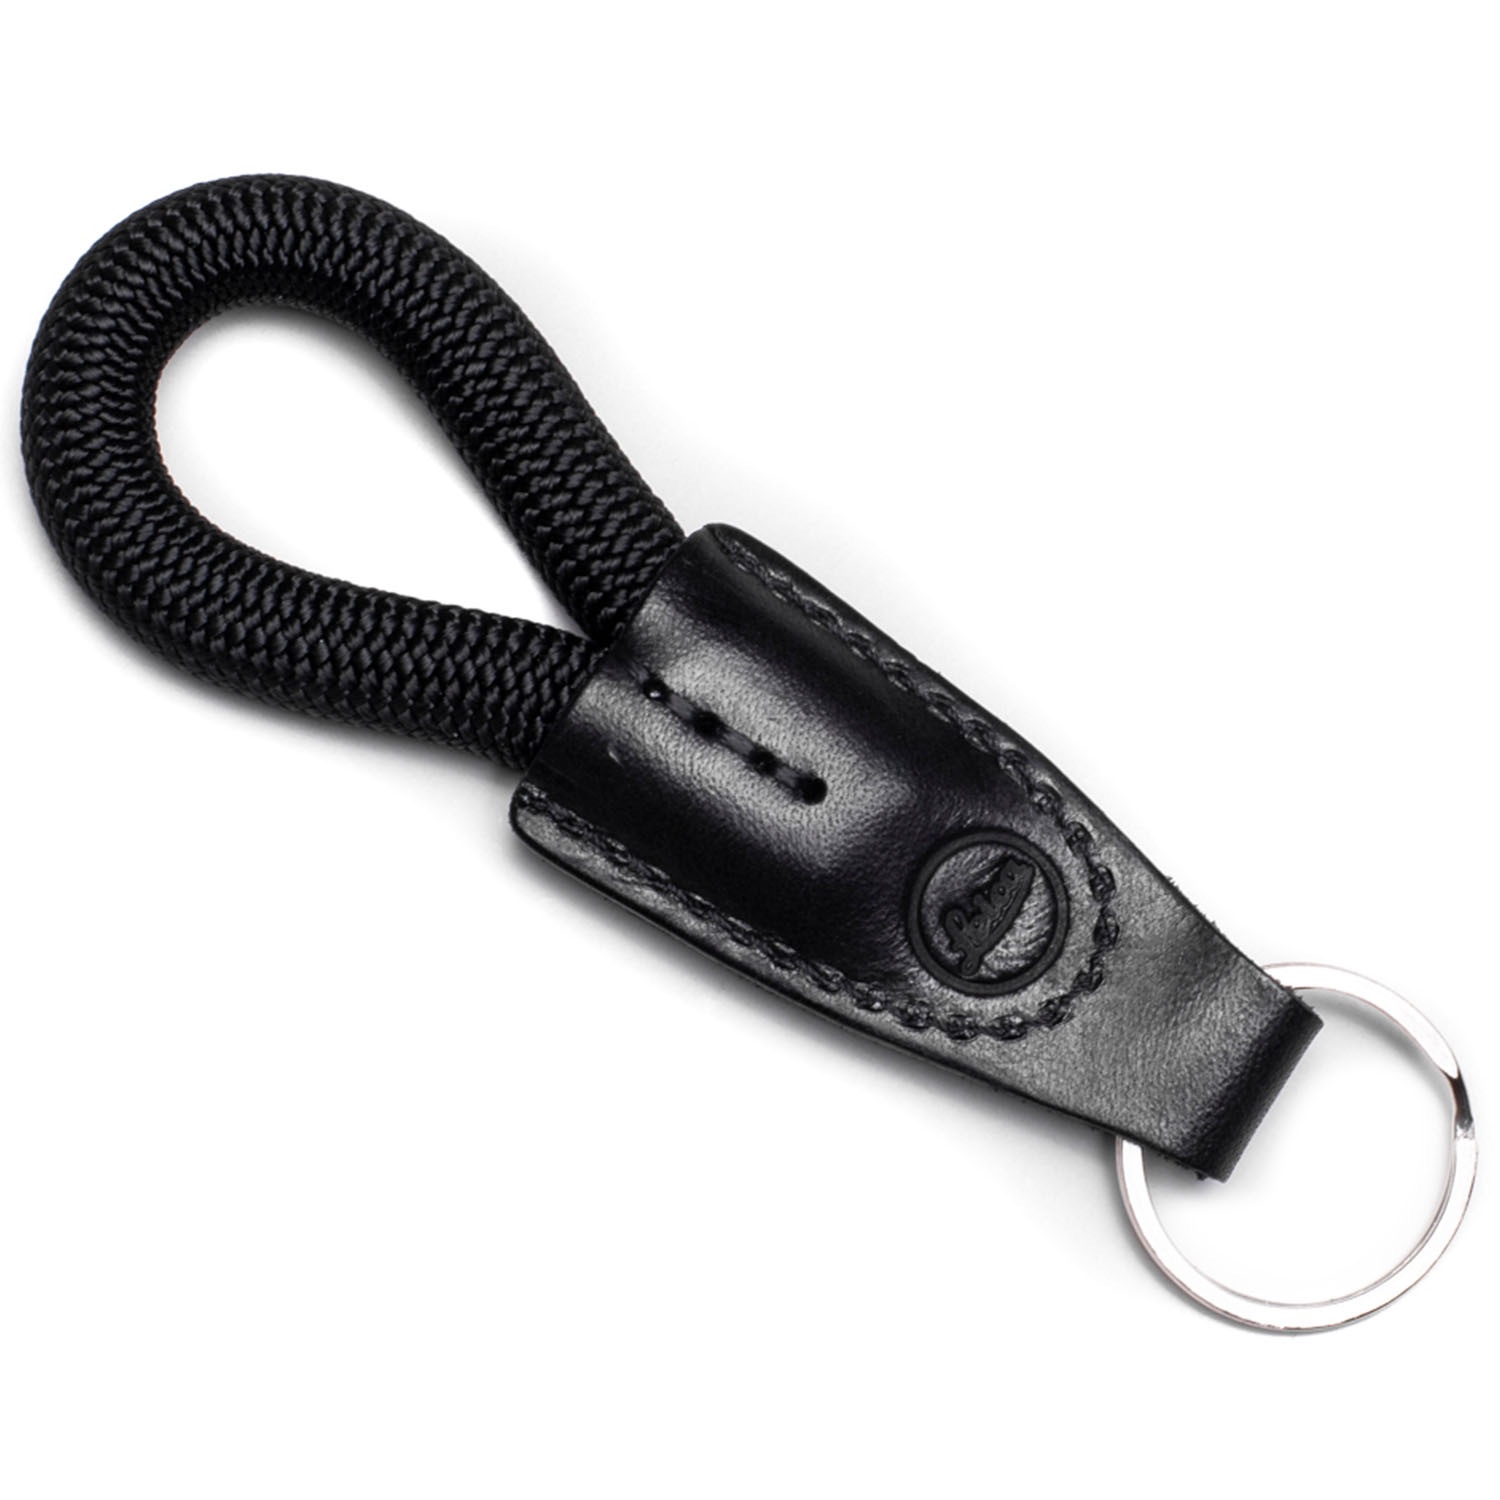 Leica Rope Key Chain, Black